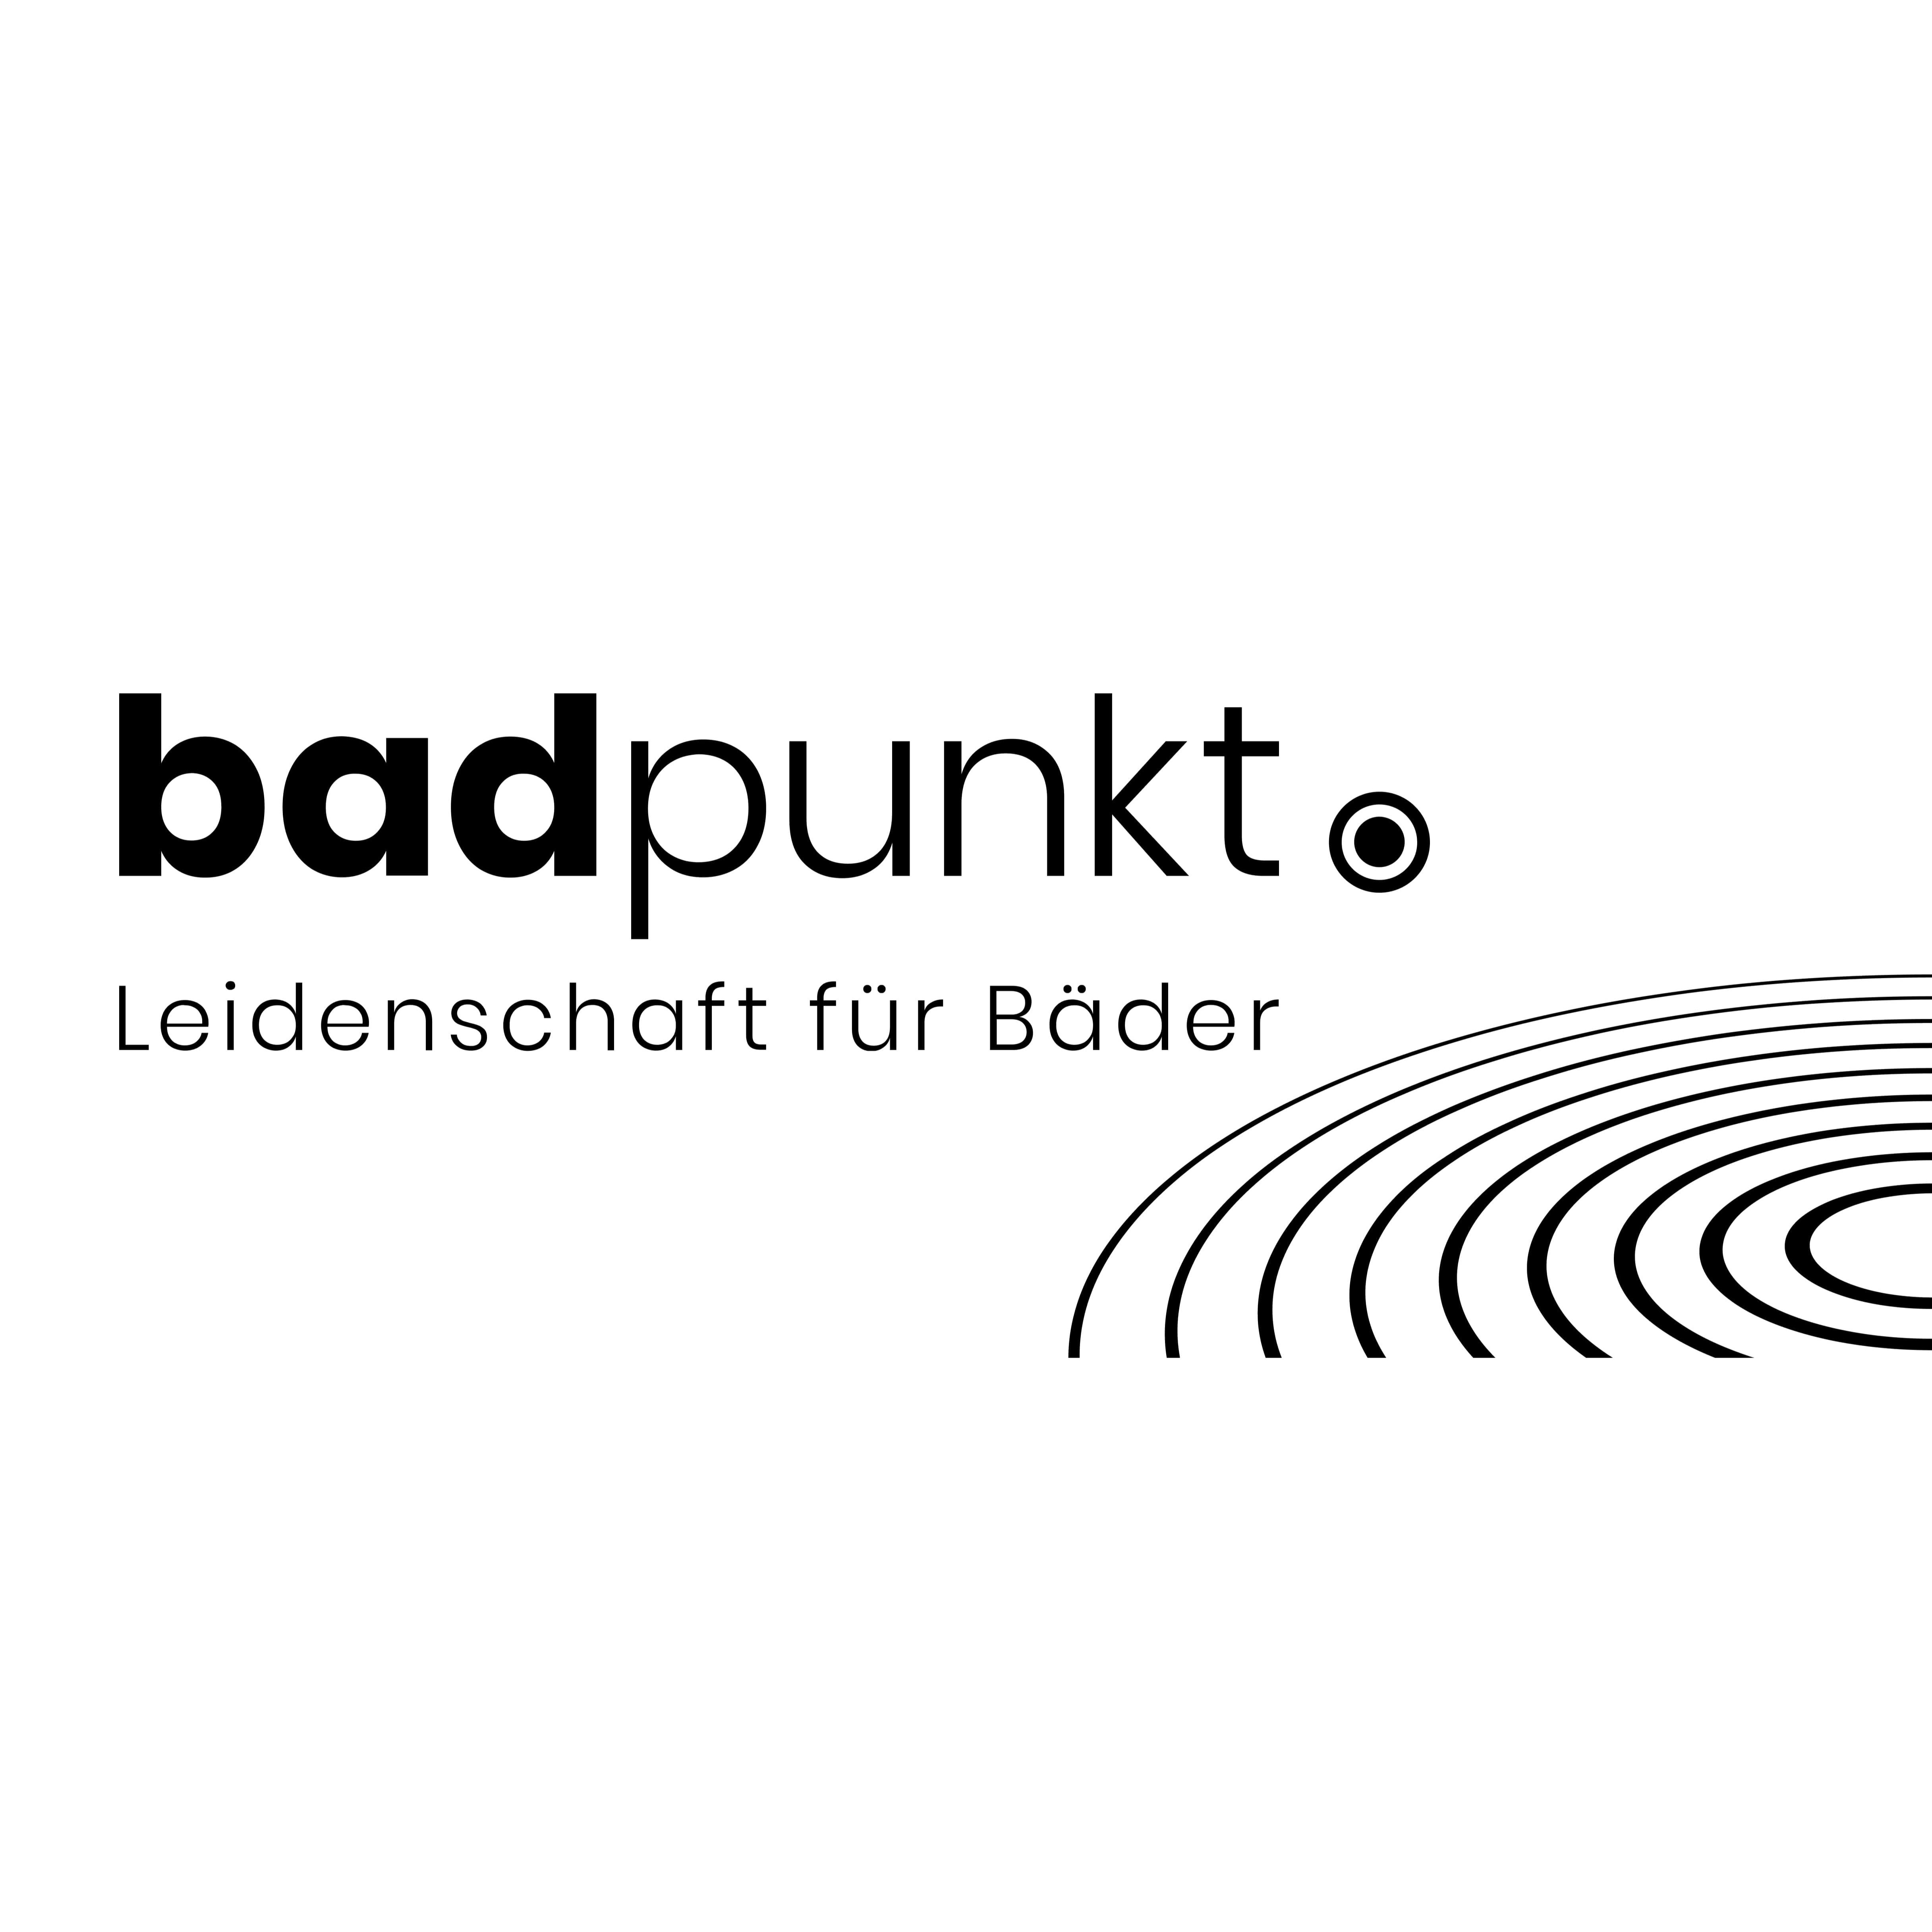 badpunkt Badausstellung Solingen - Reinshagen & Schröder in Solingen - Logo